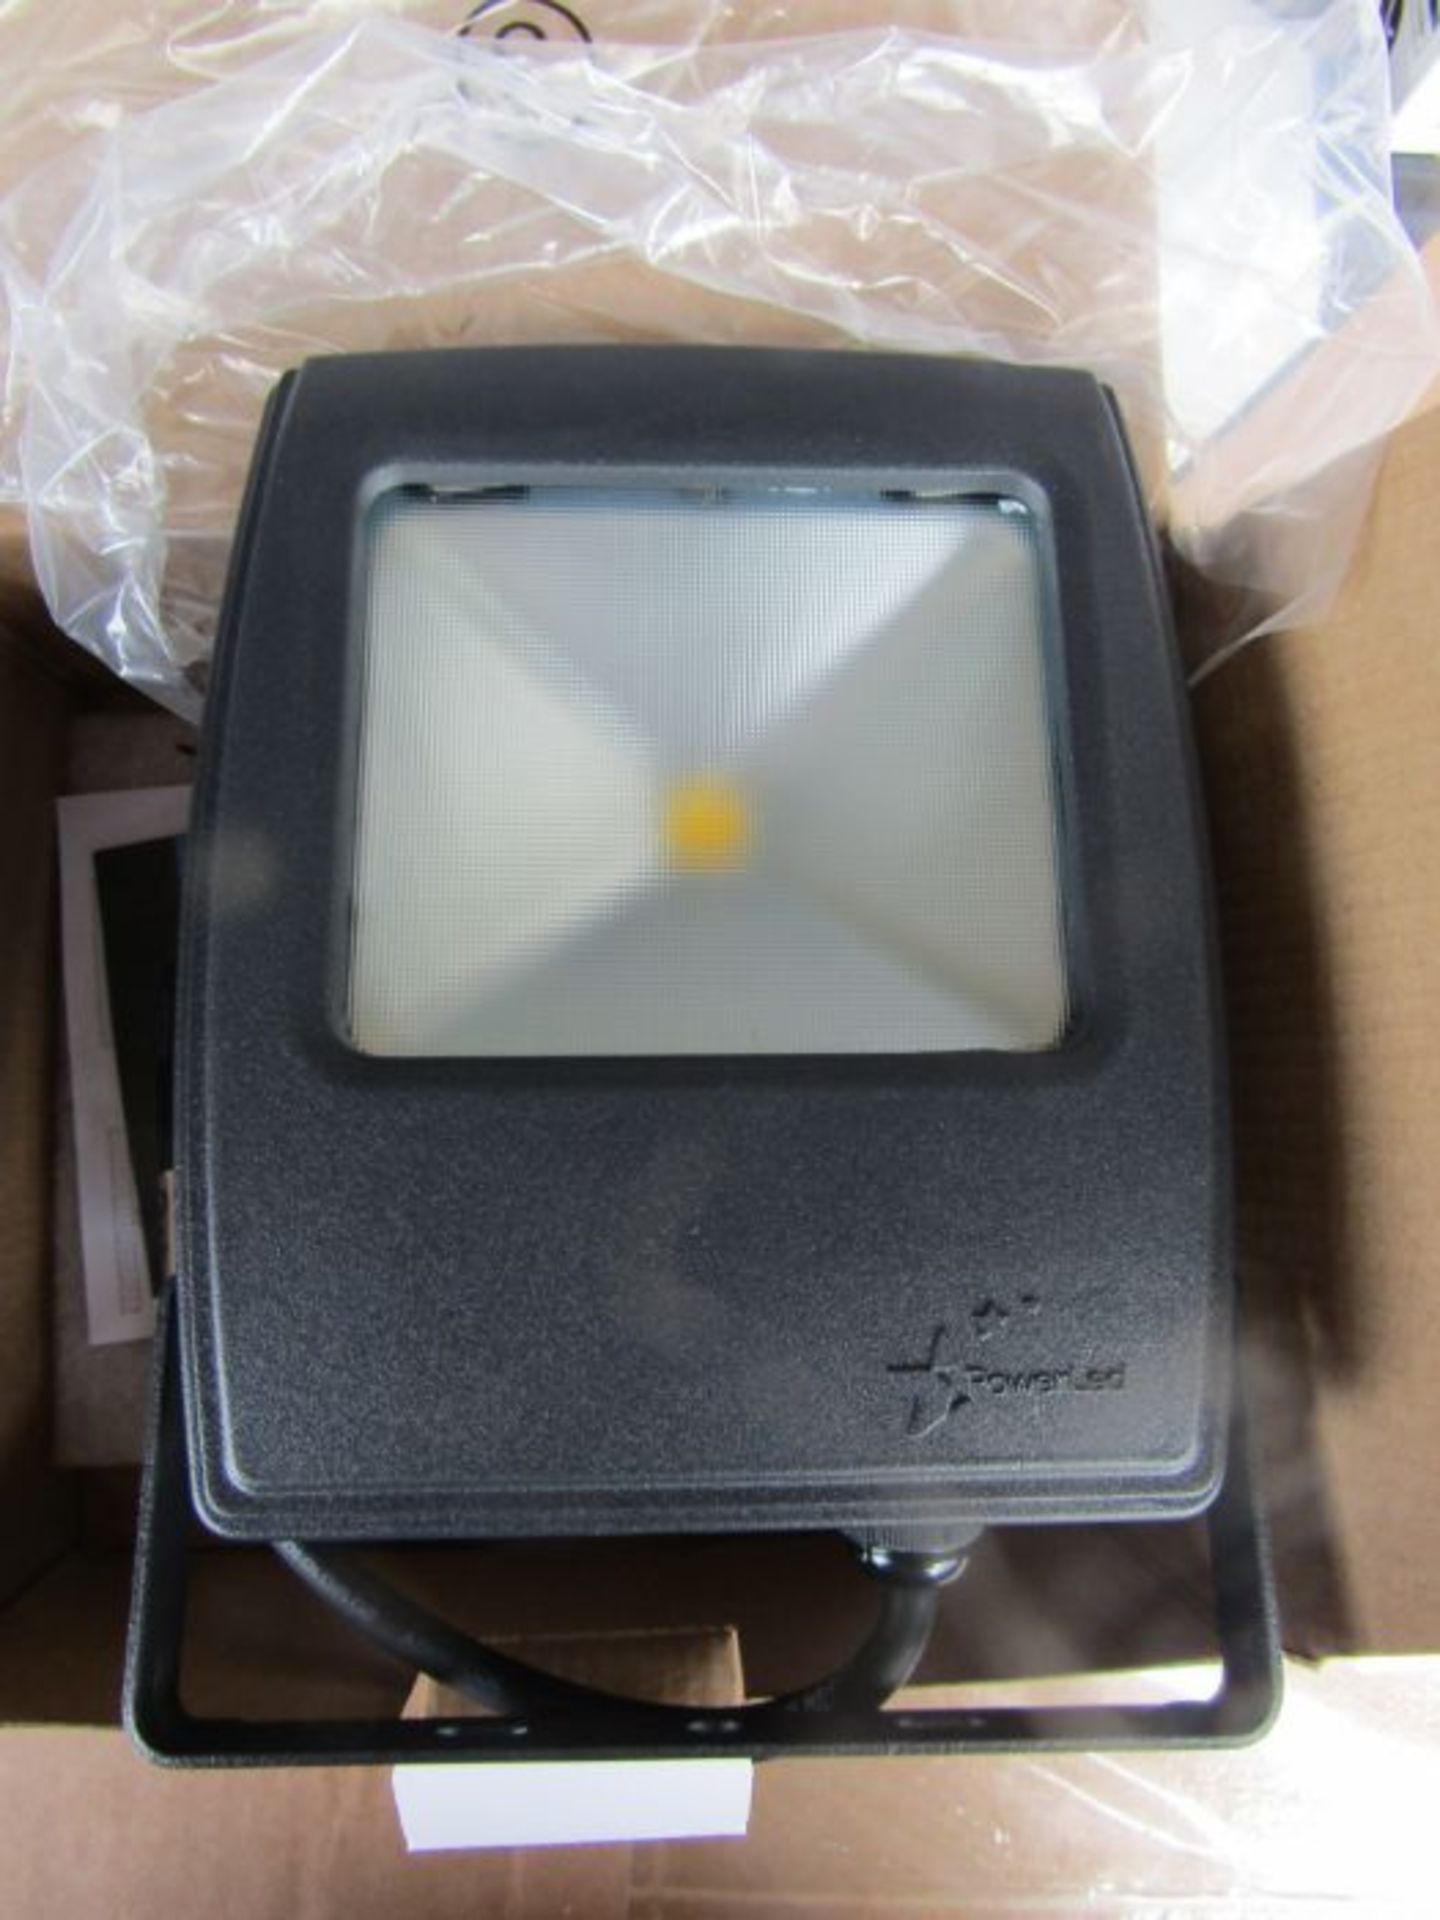 4 x PowerLED Flex10 LED Floodlight 1 LED 10 W IP65 85 - 265 V - Head 7737021